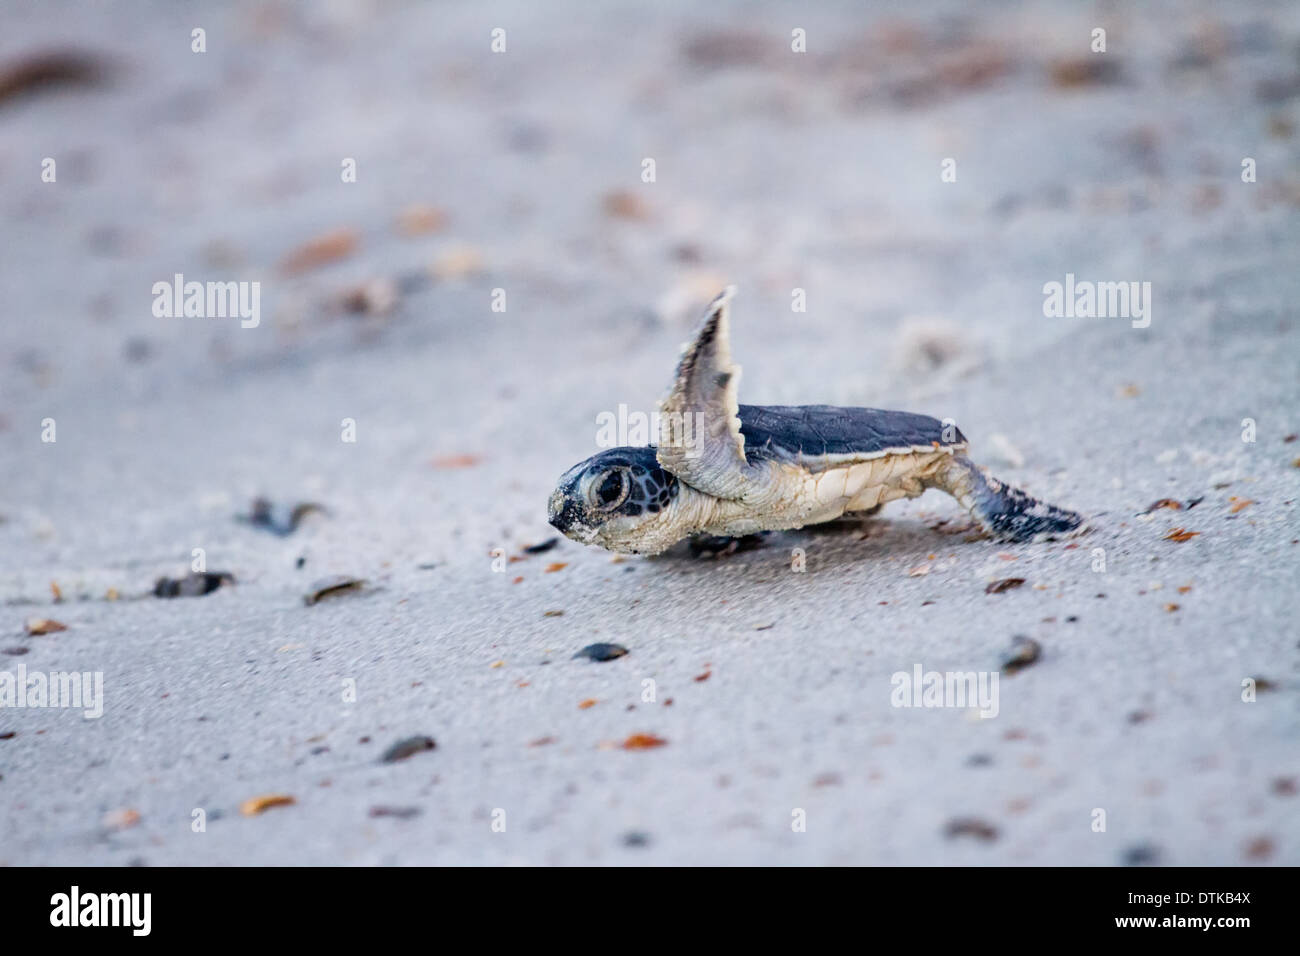 Baby Green Sea Turtle (Chelonia mydas) on its way to the ocean. Taken on Amelia Island in Florida. Stock Photo